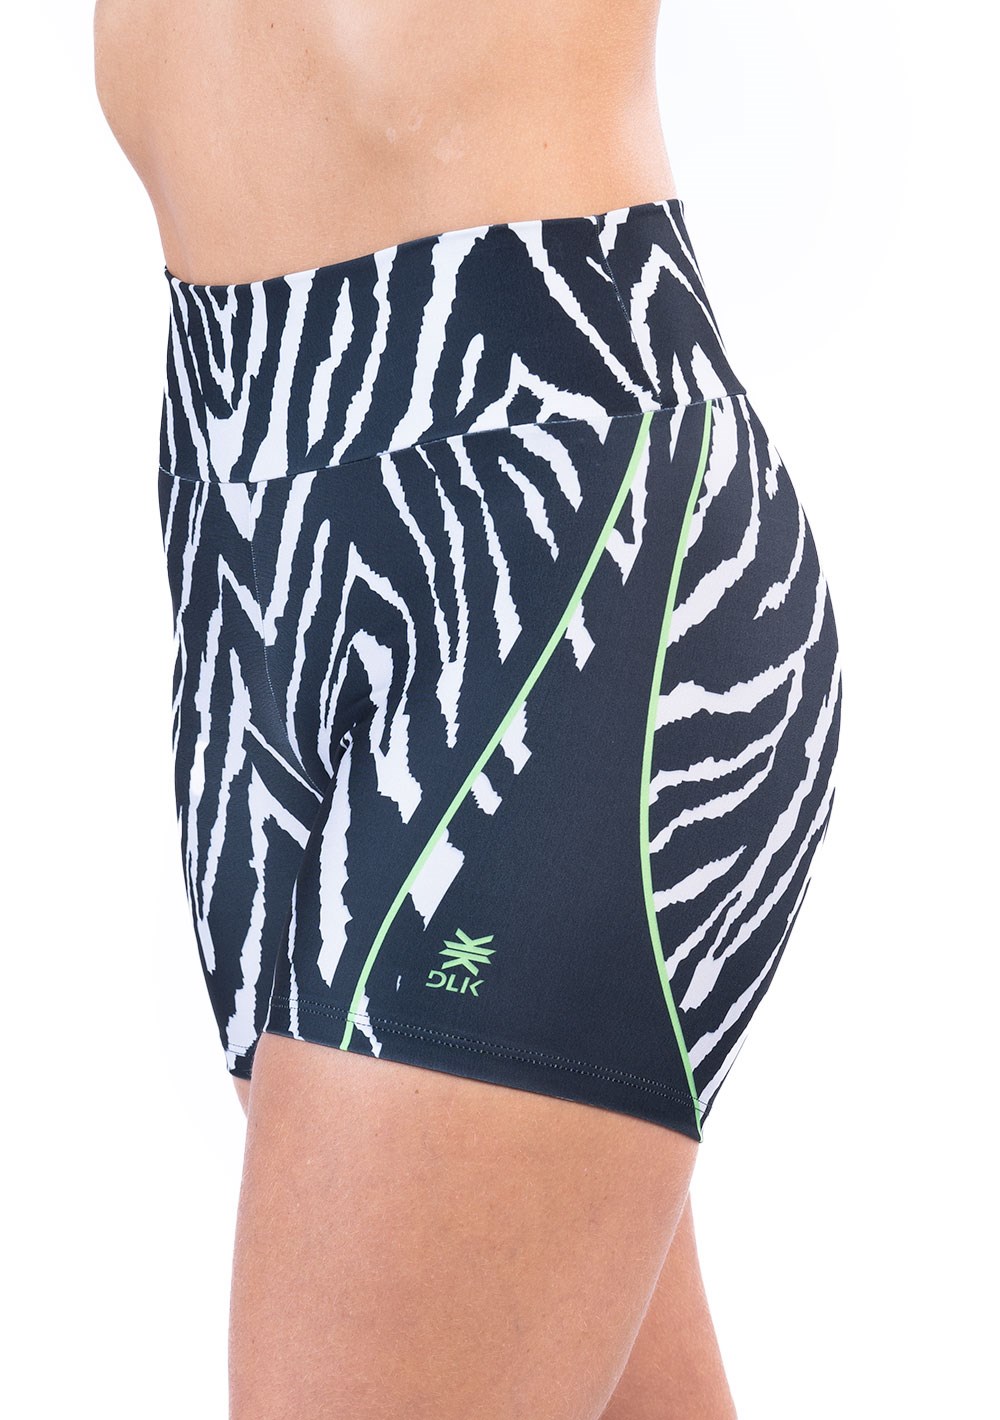 Short fitness feminino new printed estampado zebra